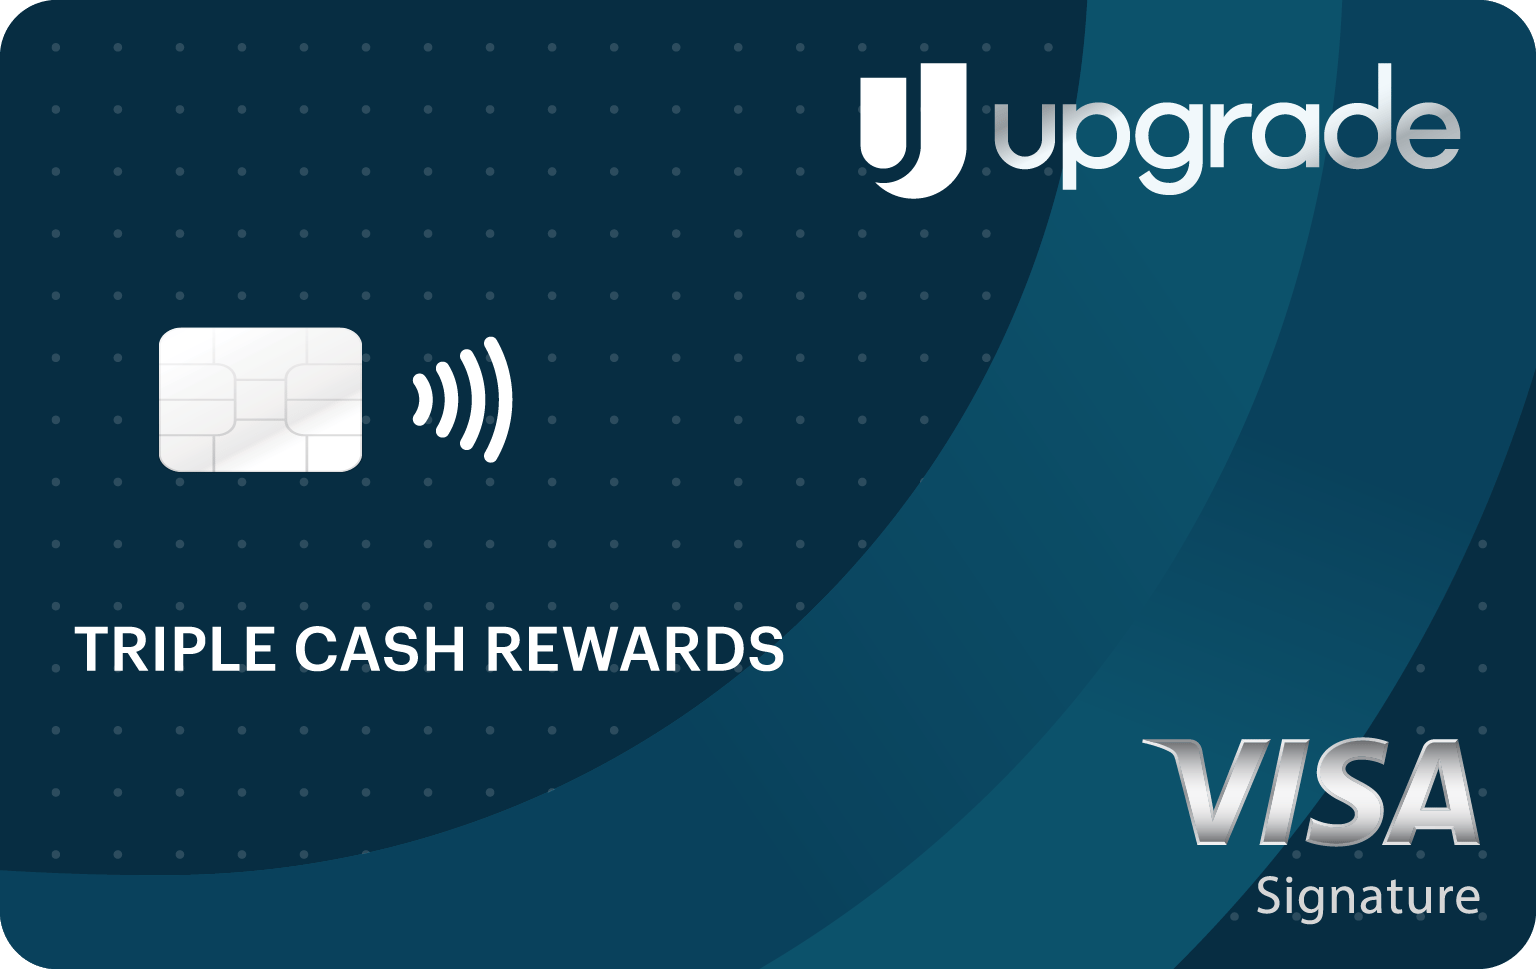 Upgrade Triple Cash Rewards Visa